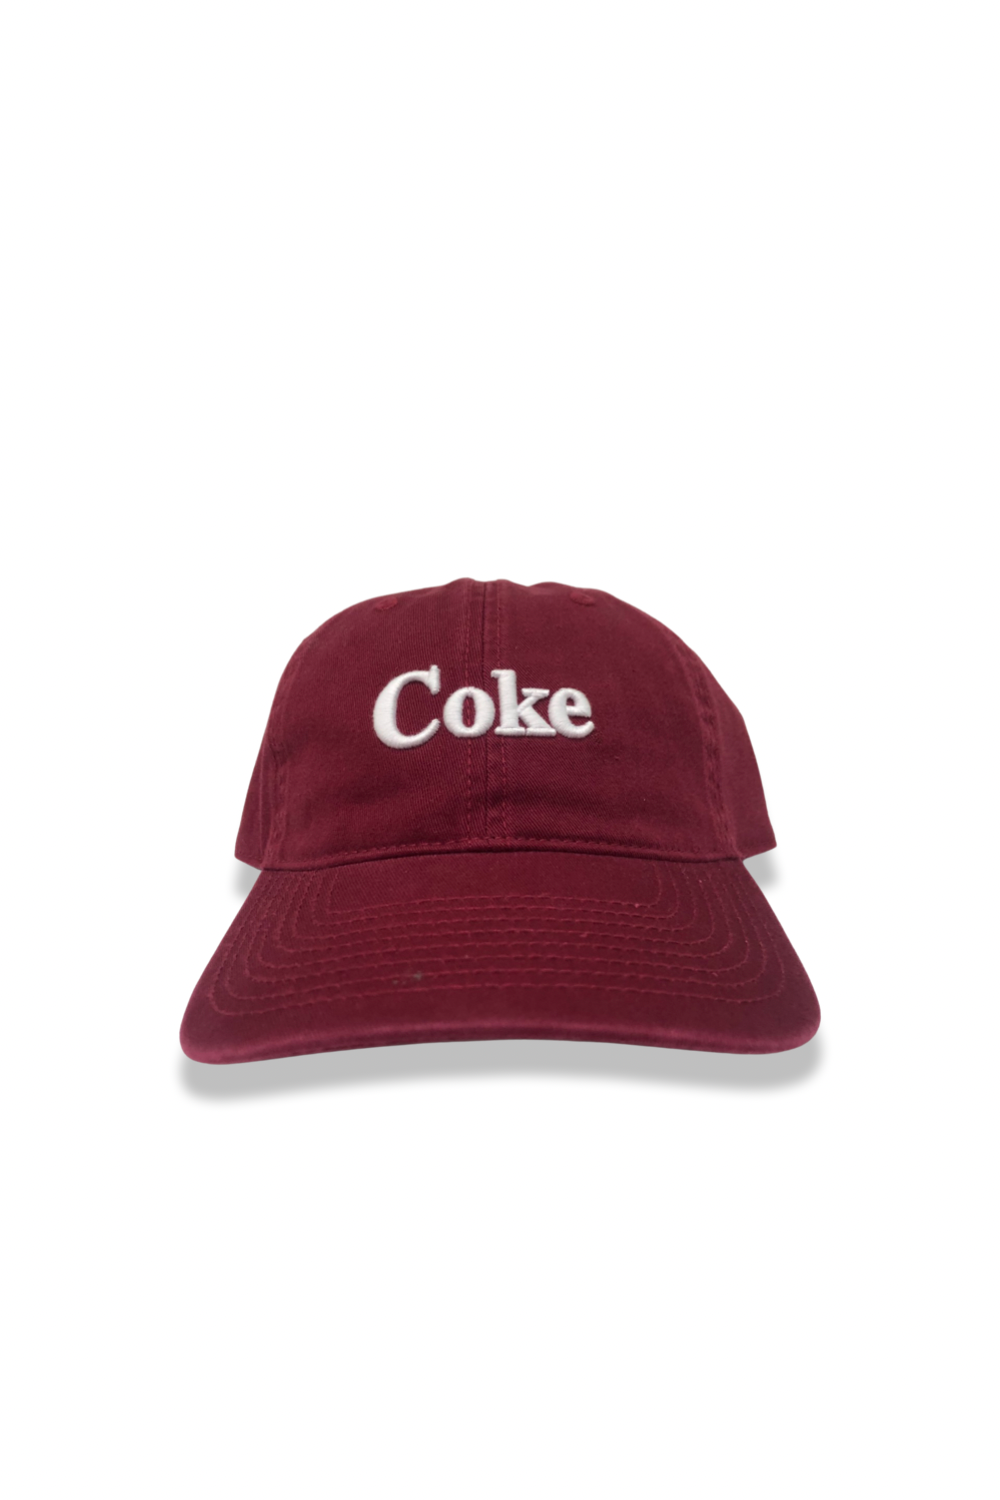 Coke Iconic Ball Cap Maroon